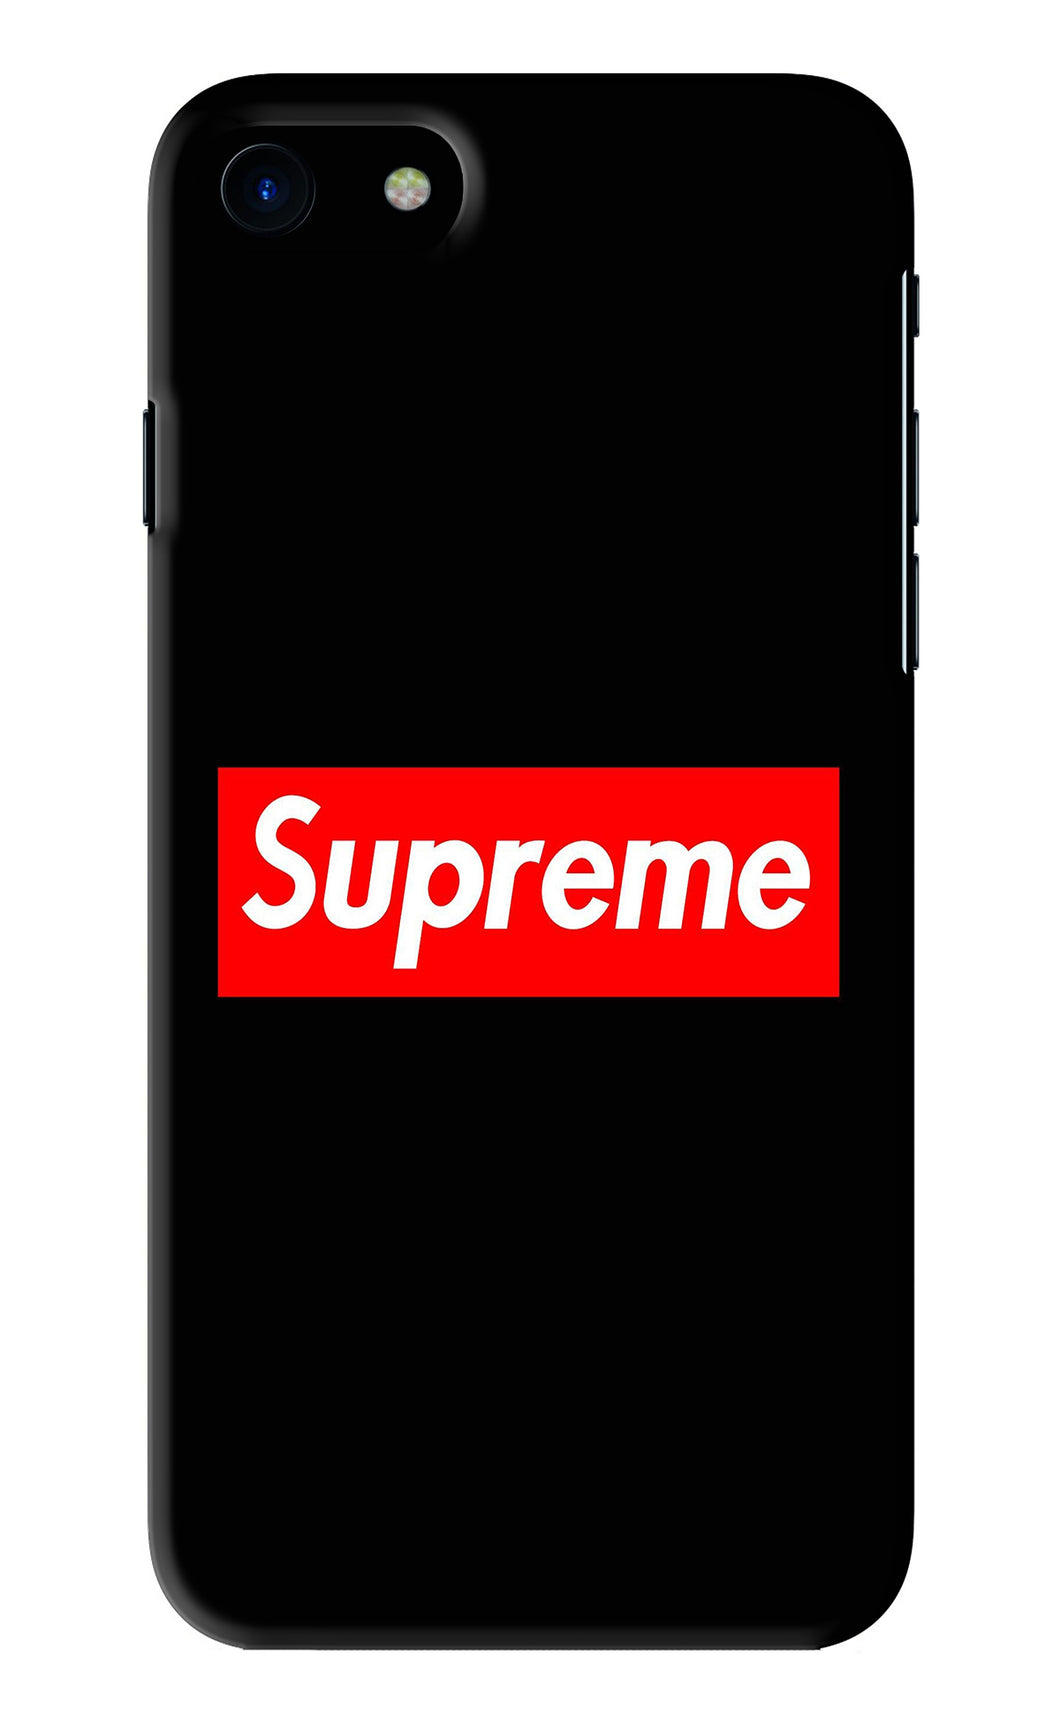 Supreme iPhone 8 Back Skin Wrap